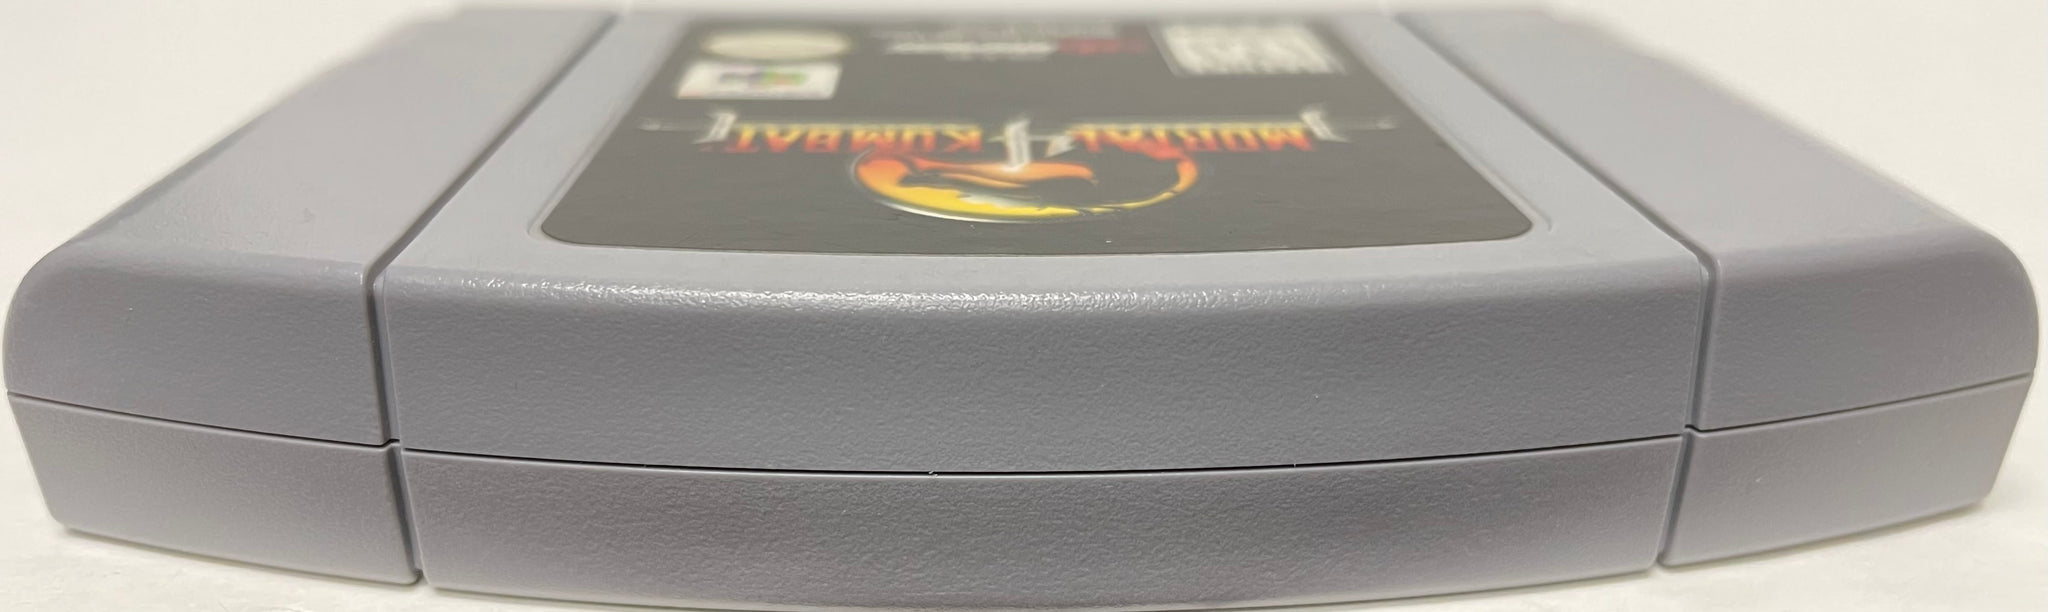 Corona Jumper: Mortal Kombat IV (N64, 1998) + Mortal Kombat Gold